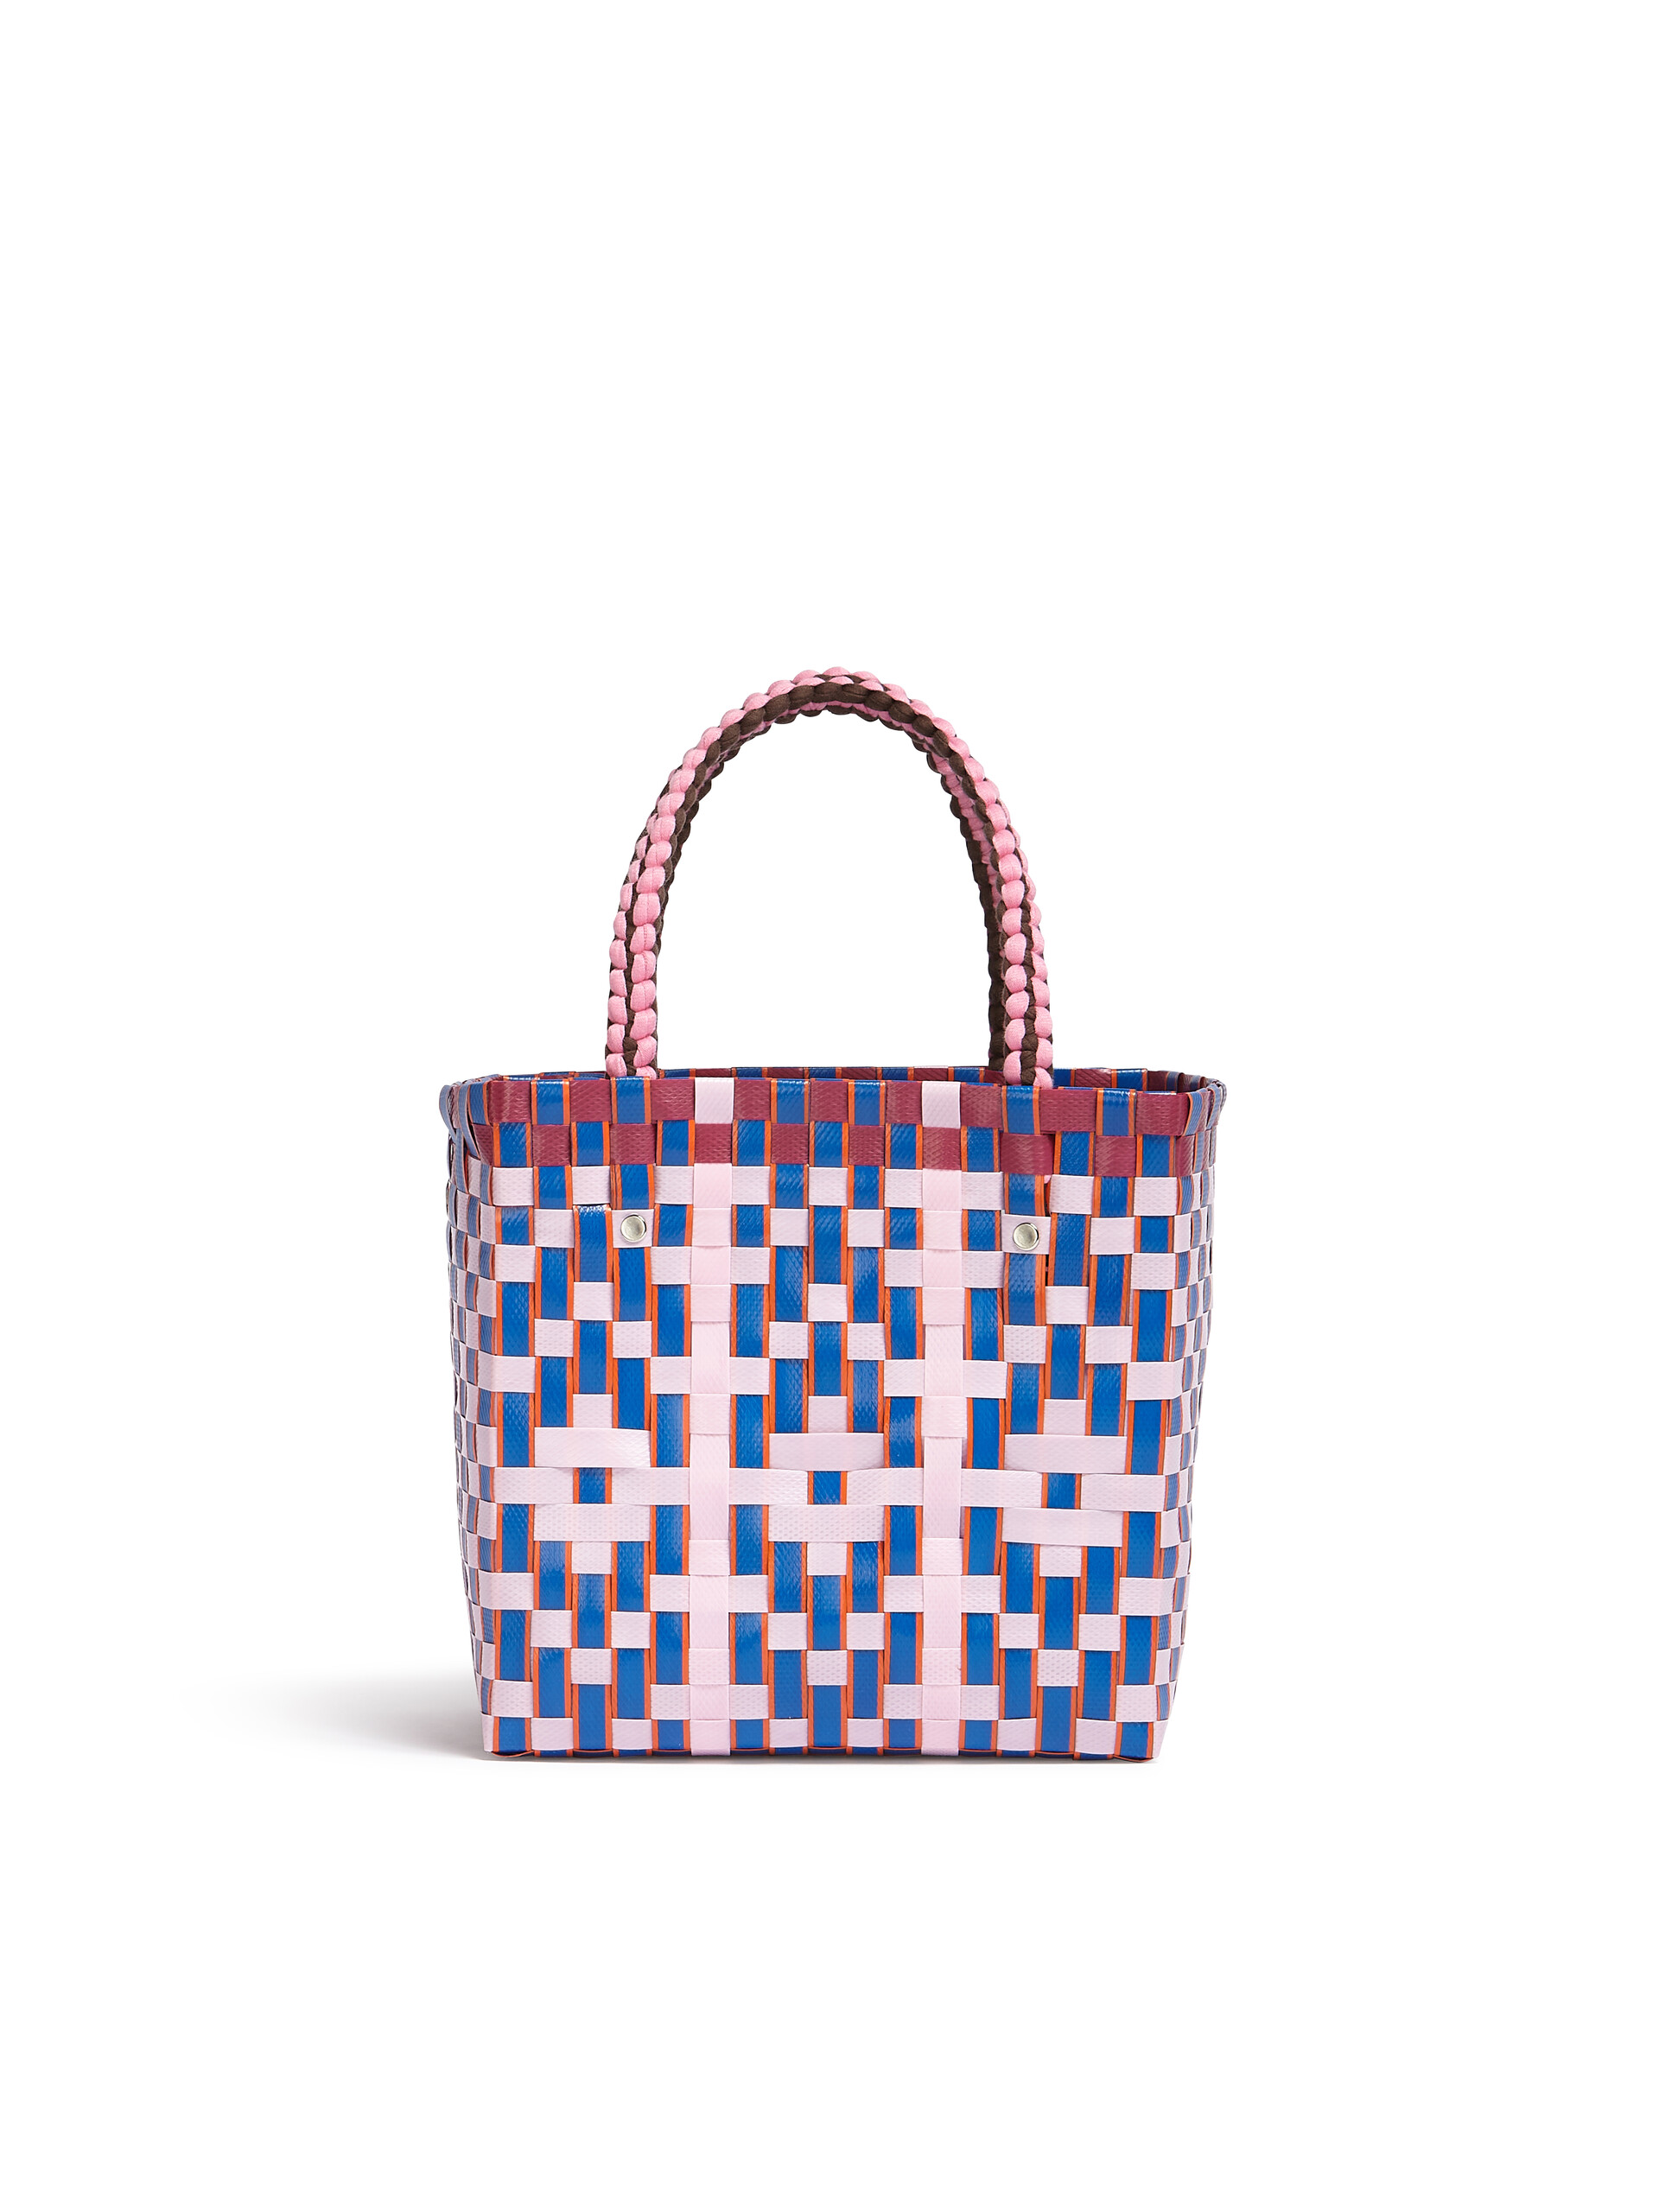 MARNI MARKET BASKET bag in pink diamond woven material - Bags - Image 3